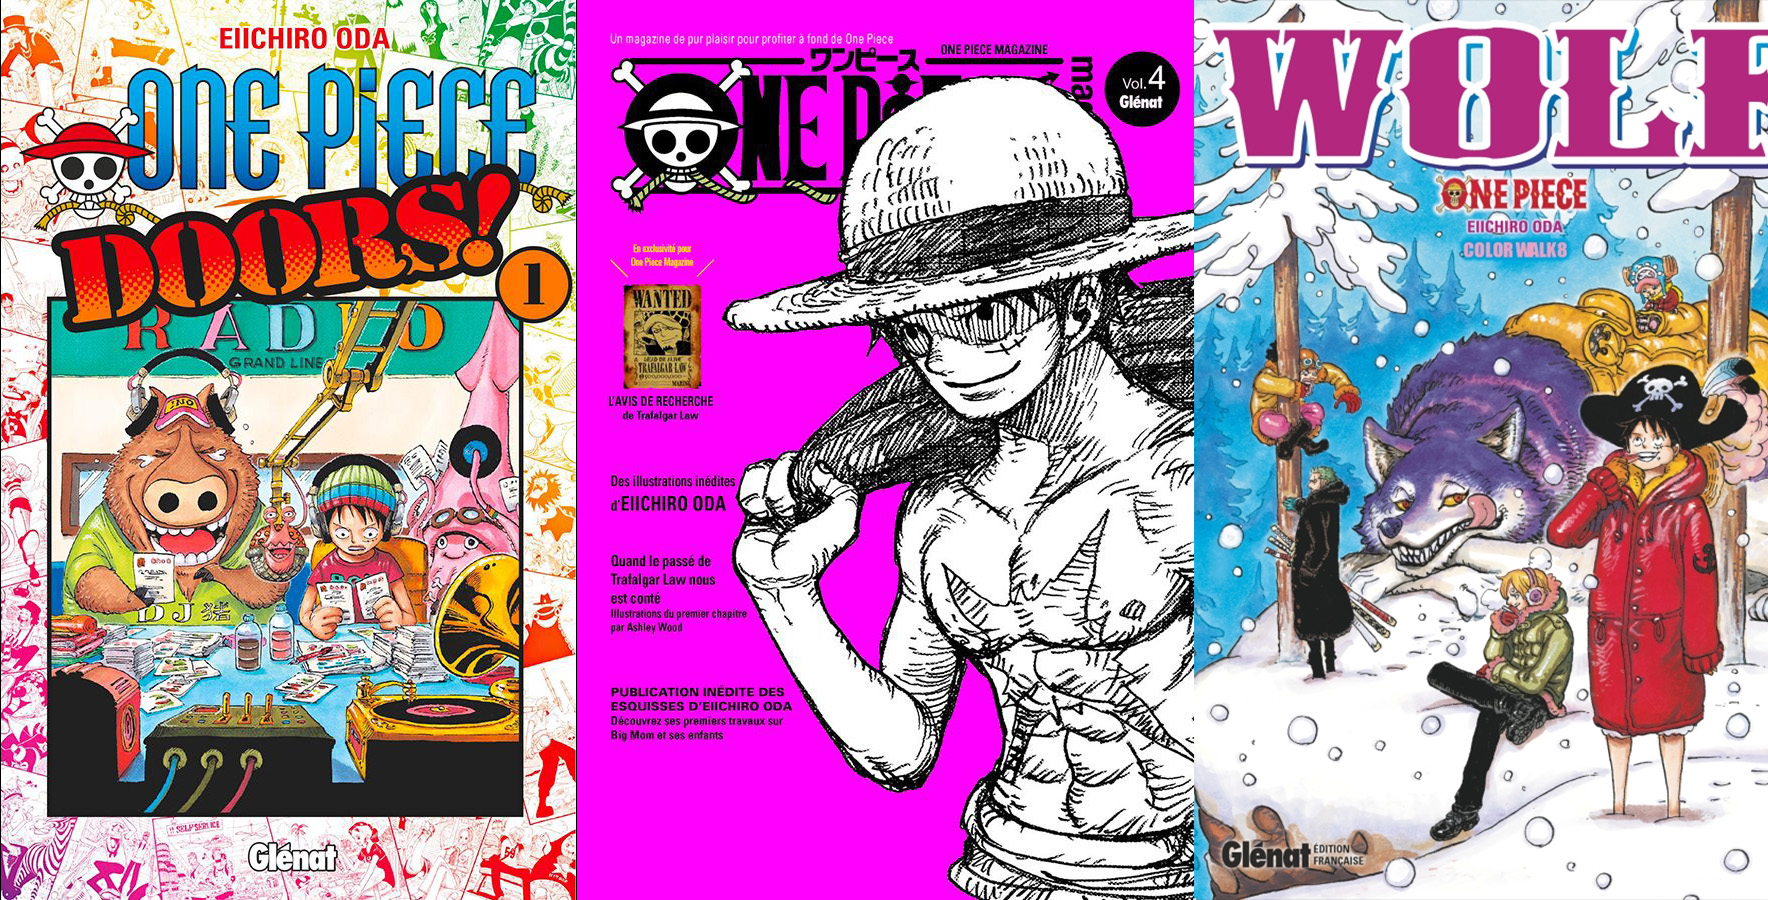 Bleachmx Fr Wp Content Uploads One Piece Magazine 4 Color Walk 8 Doors Jpg